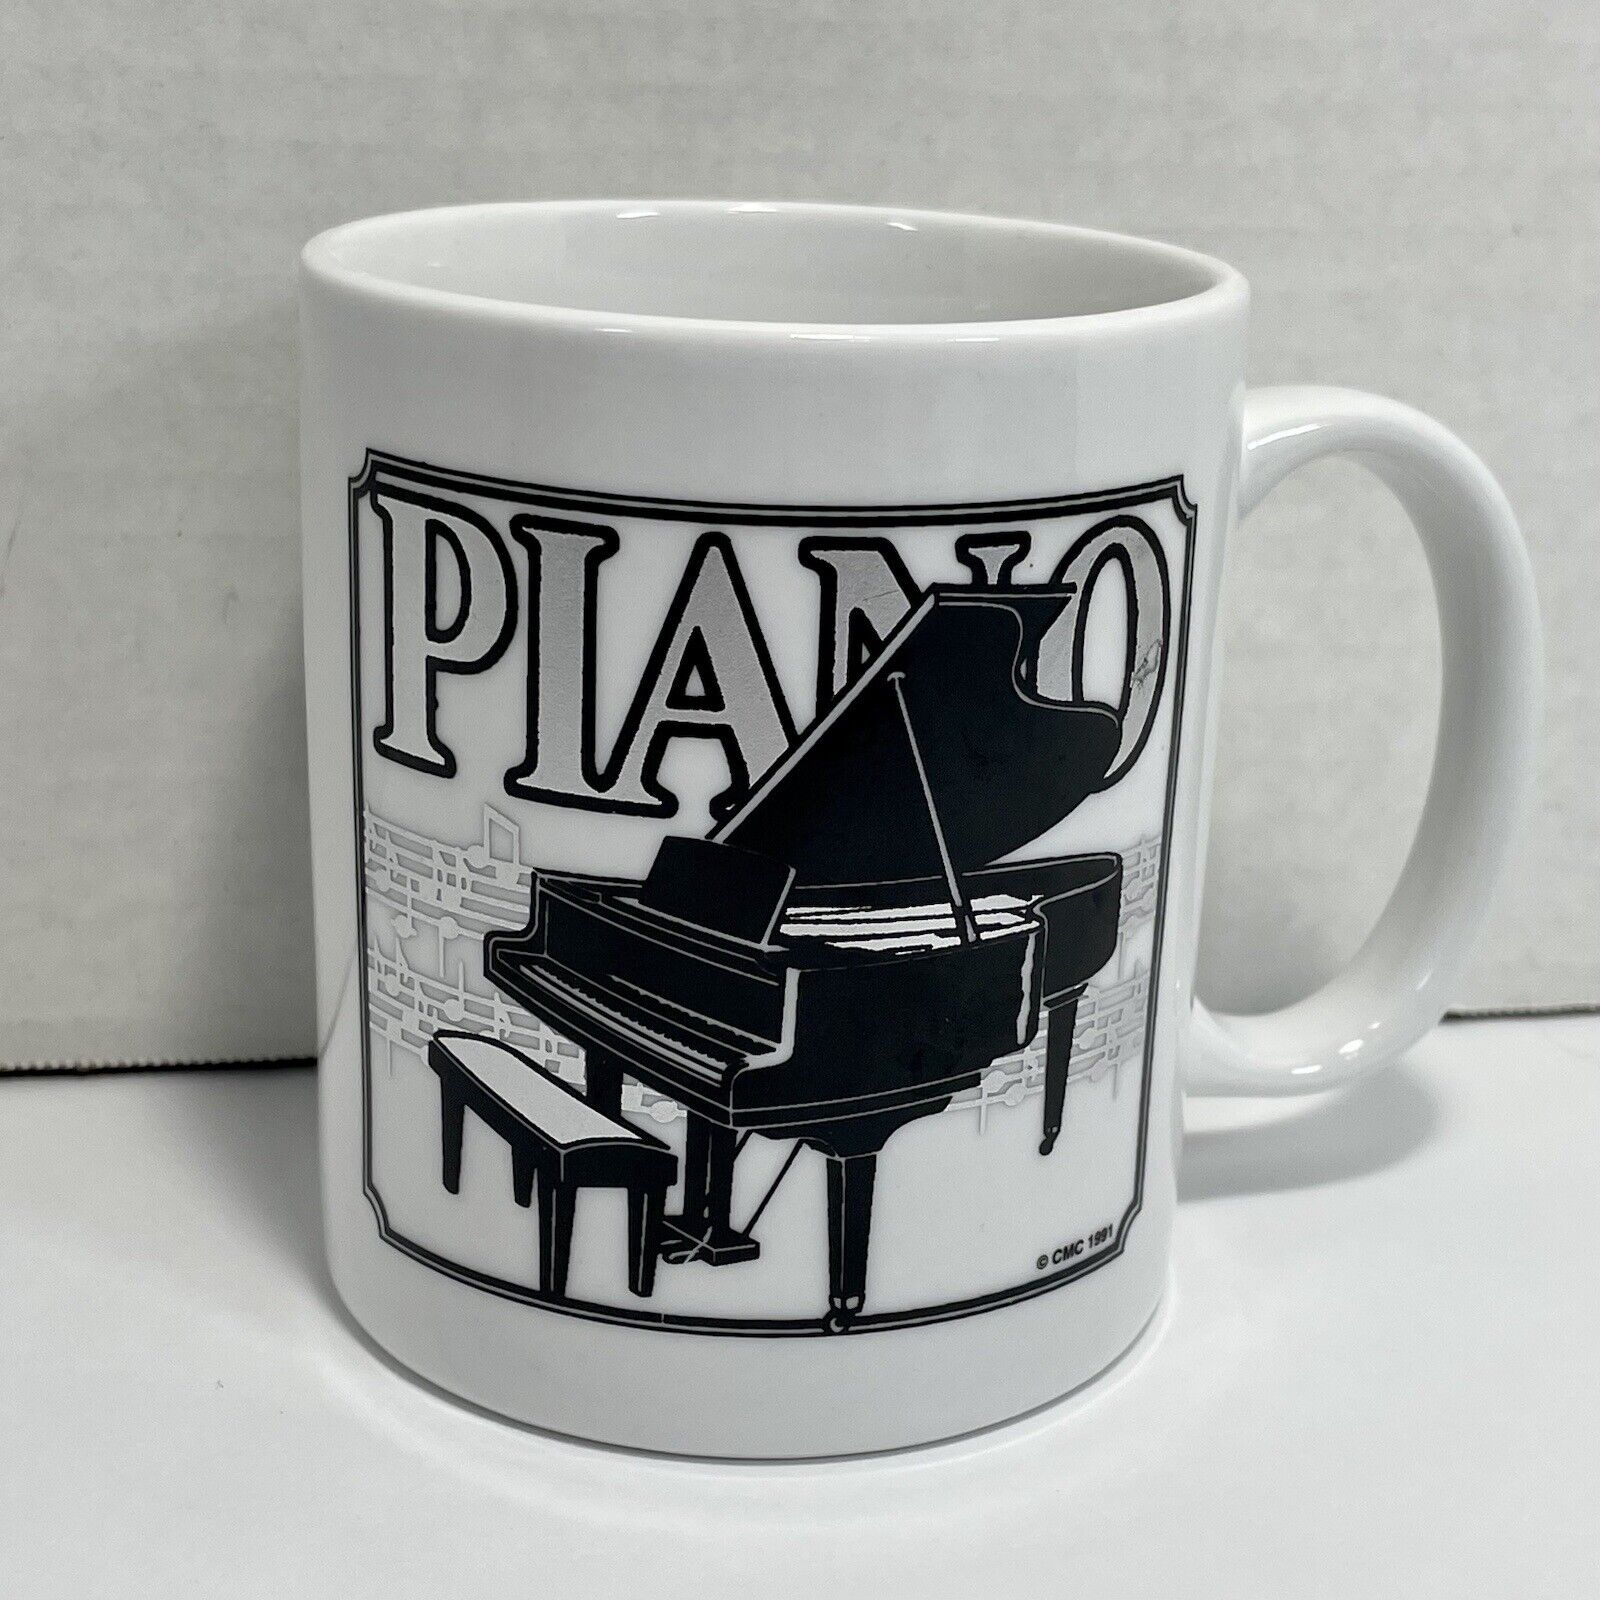 Grand Piano Ceramic Coffee Cup Mug 1991 Concert Recital